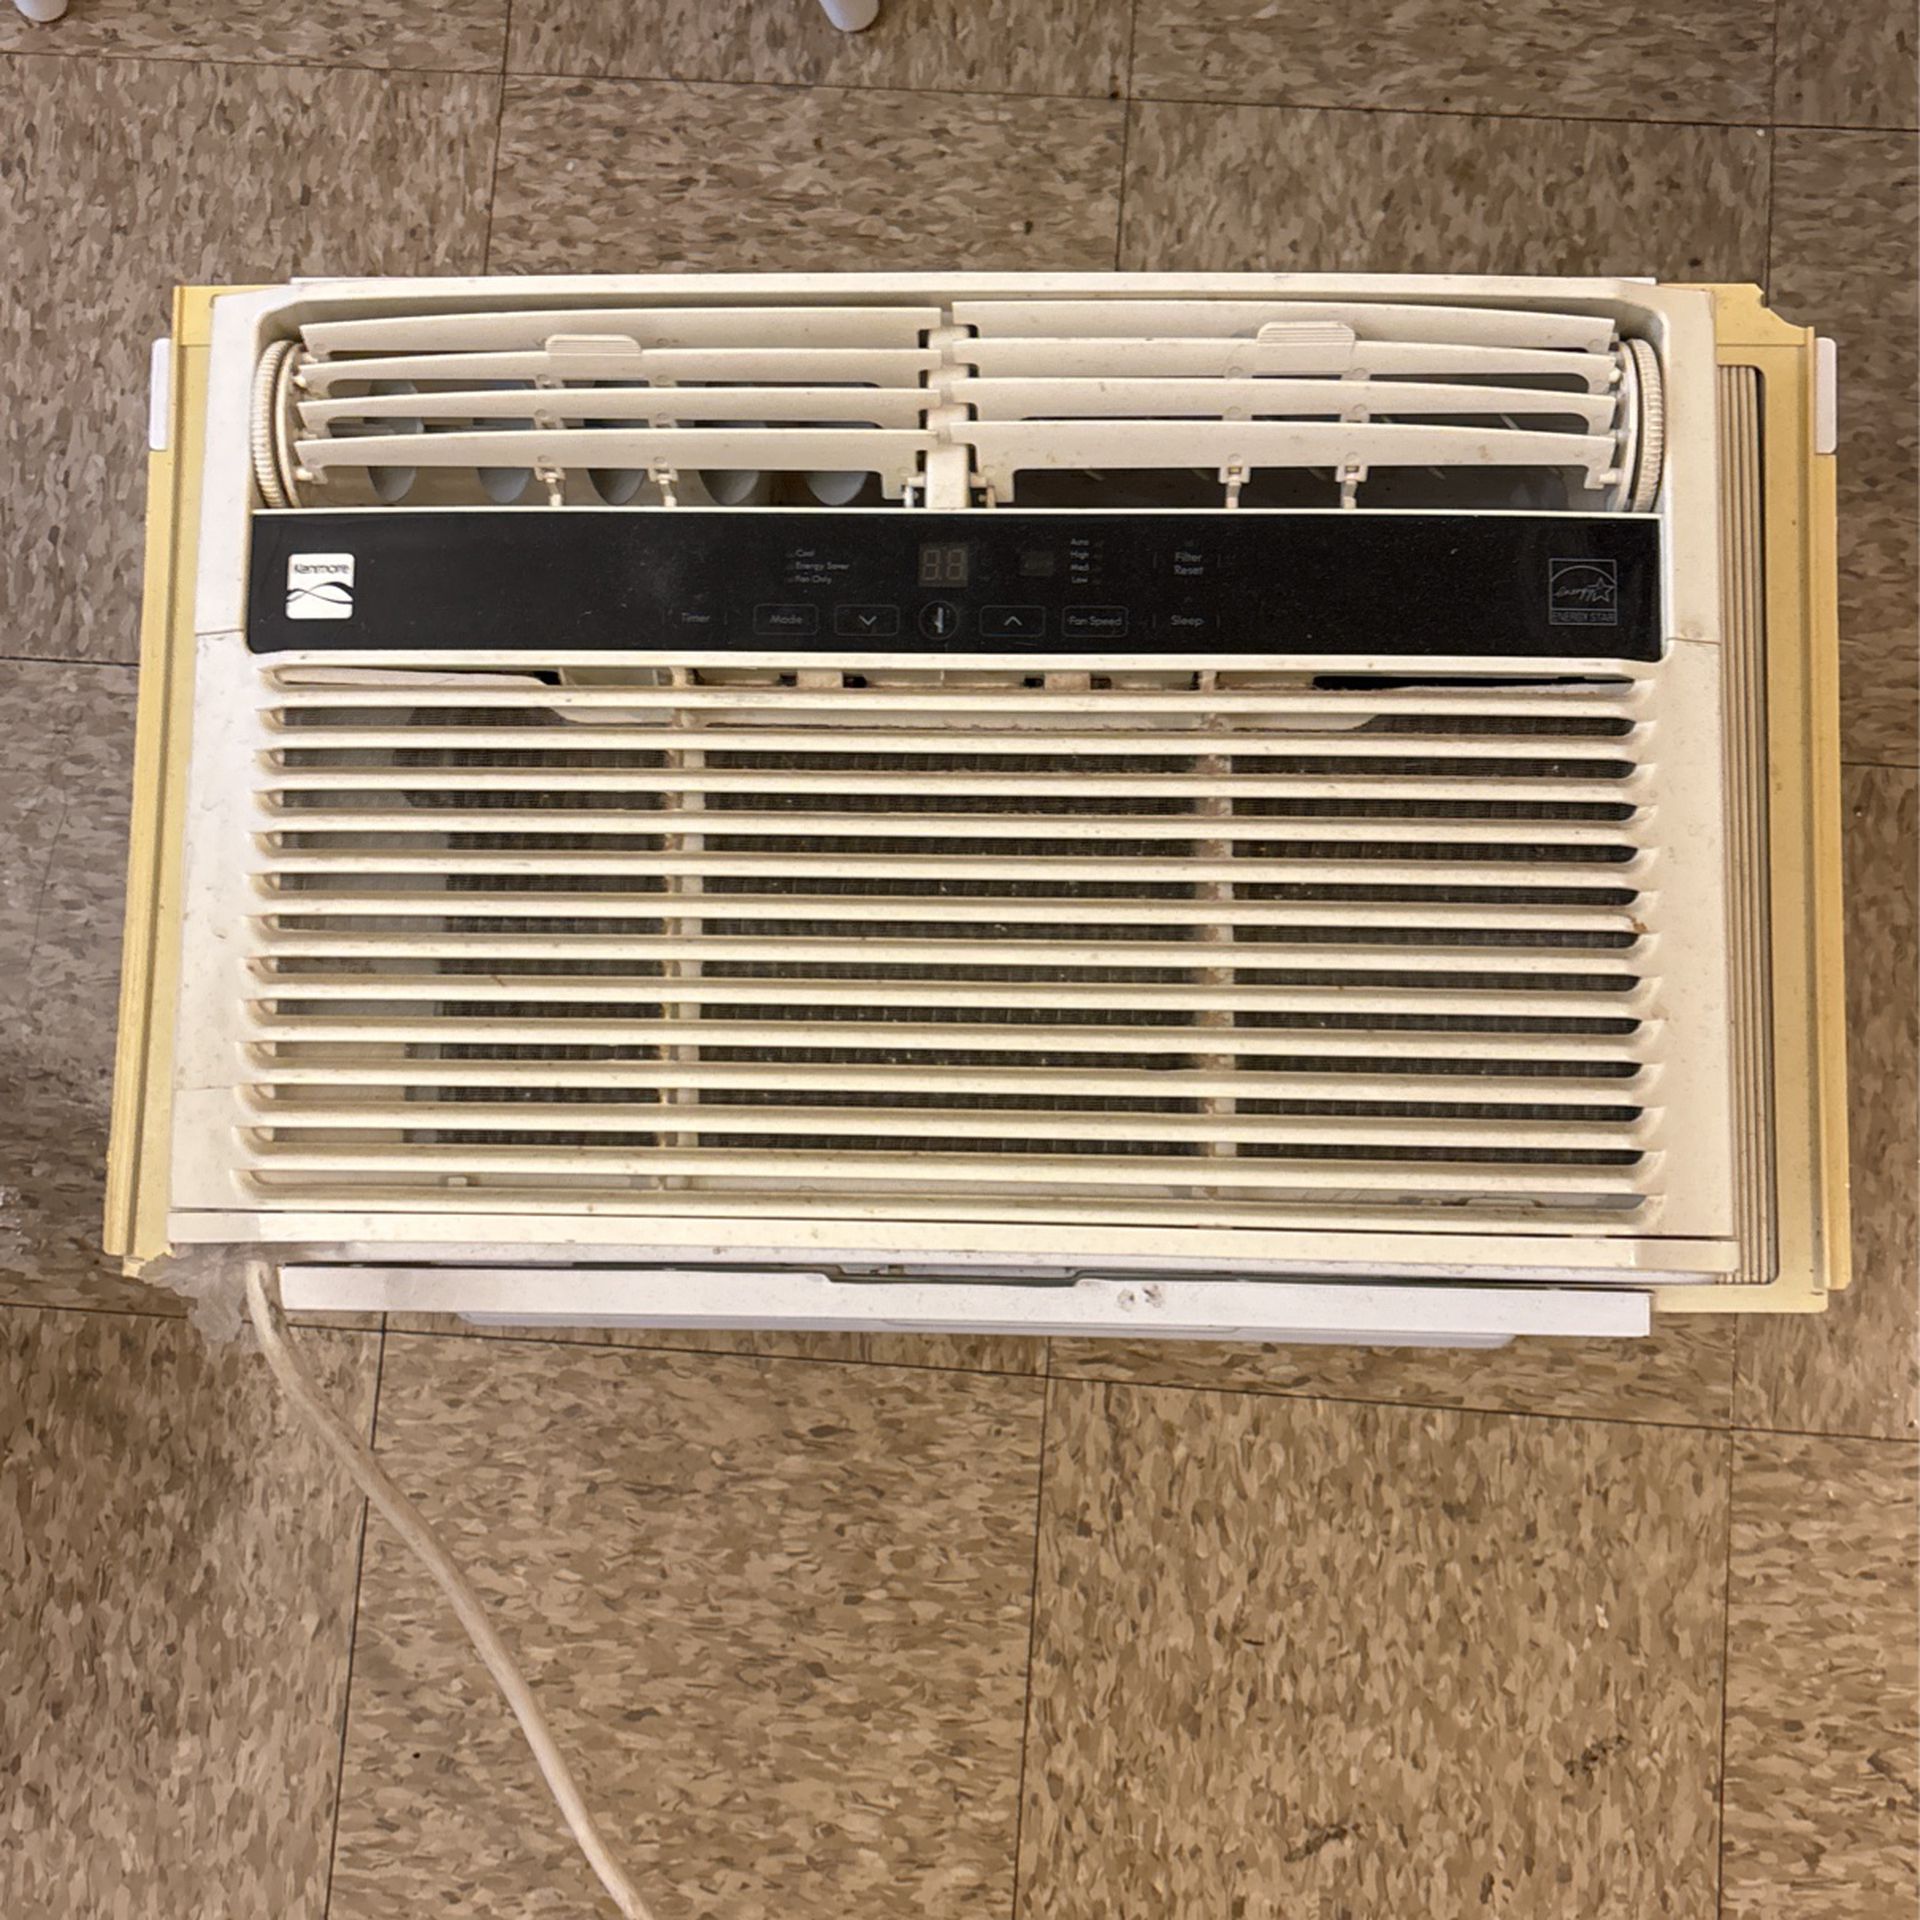 Kemore Air conditioner 